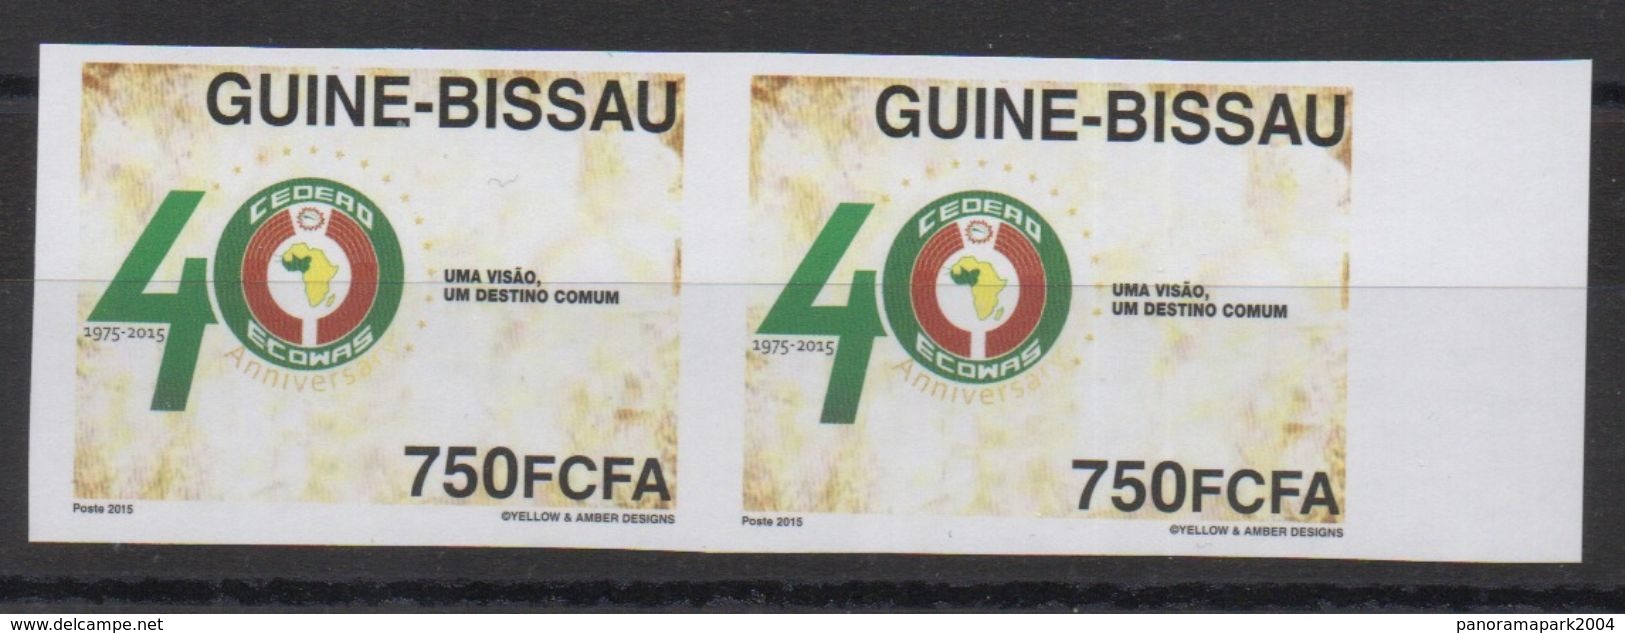 ULTRA RARE UNISSUED IMPERF PAIR 750F VAL !!! Guiné-Bissau Guinea Guinée 2015 Joint Issue CEDEAO ECOWAS - Gemeinschaftsausgaben